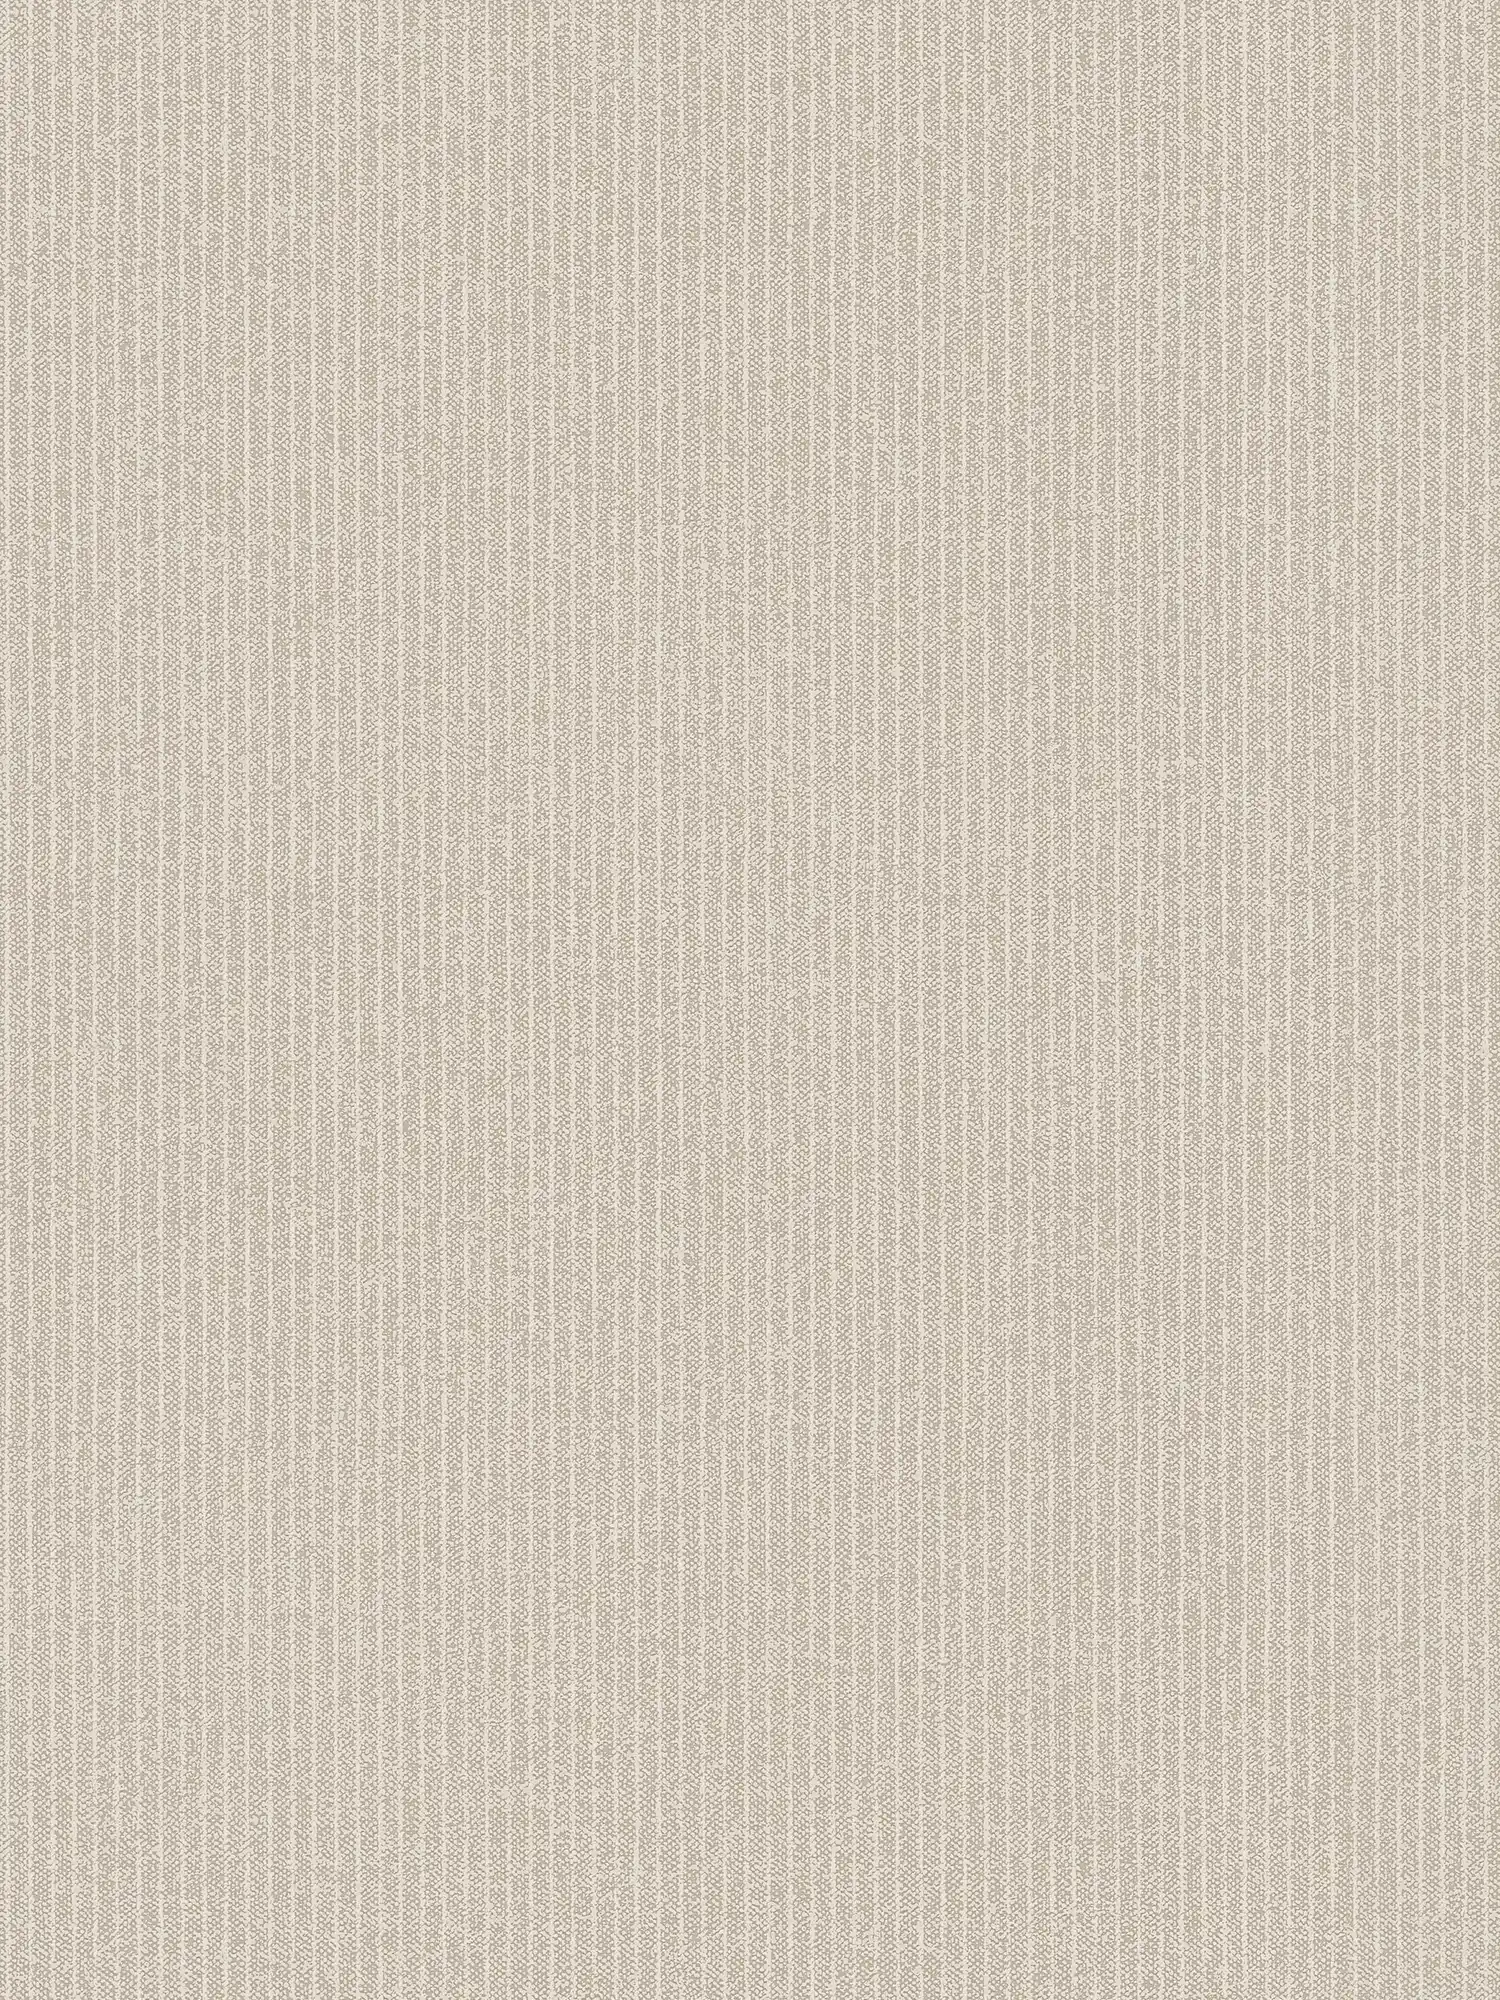 papel pintado de rayas estrechas, aspecto de lino - beige, marrón
